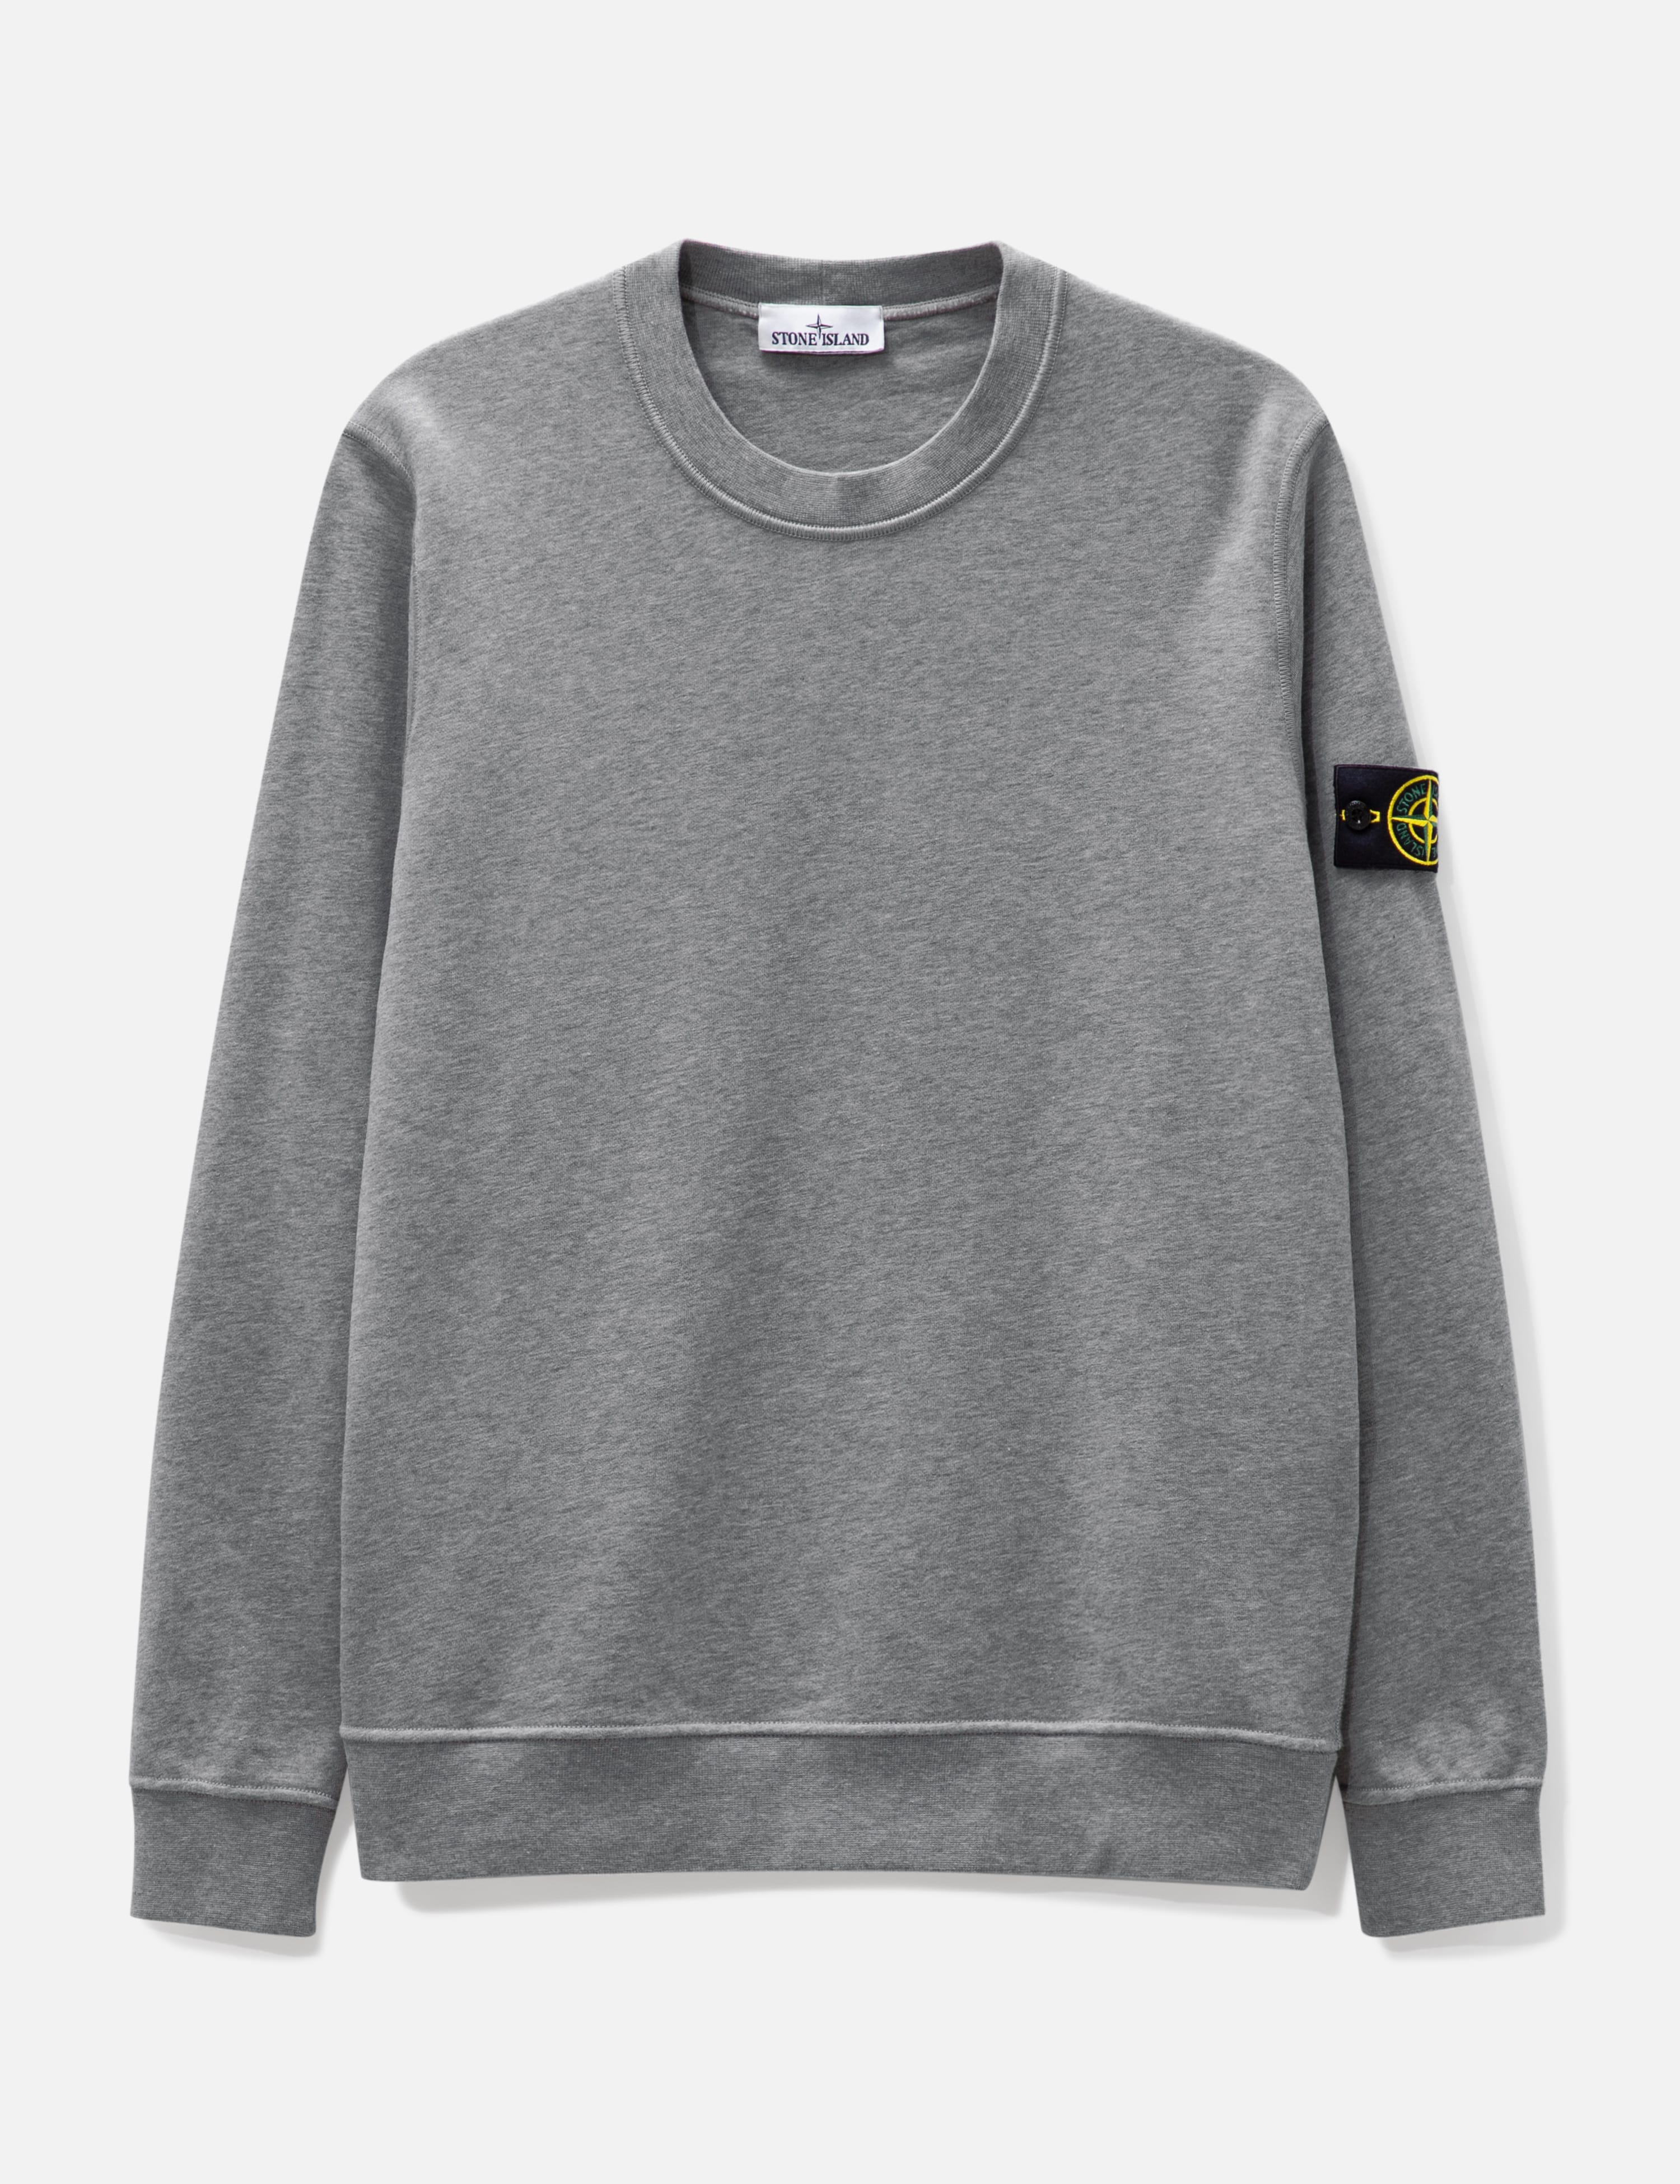 Stone Island - Crewneck Sweatshirt | HBX - Globally Curated